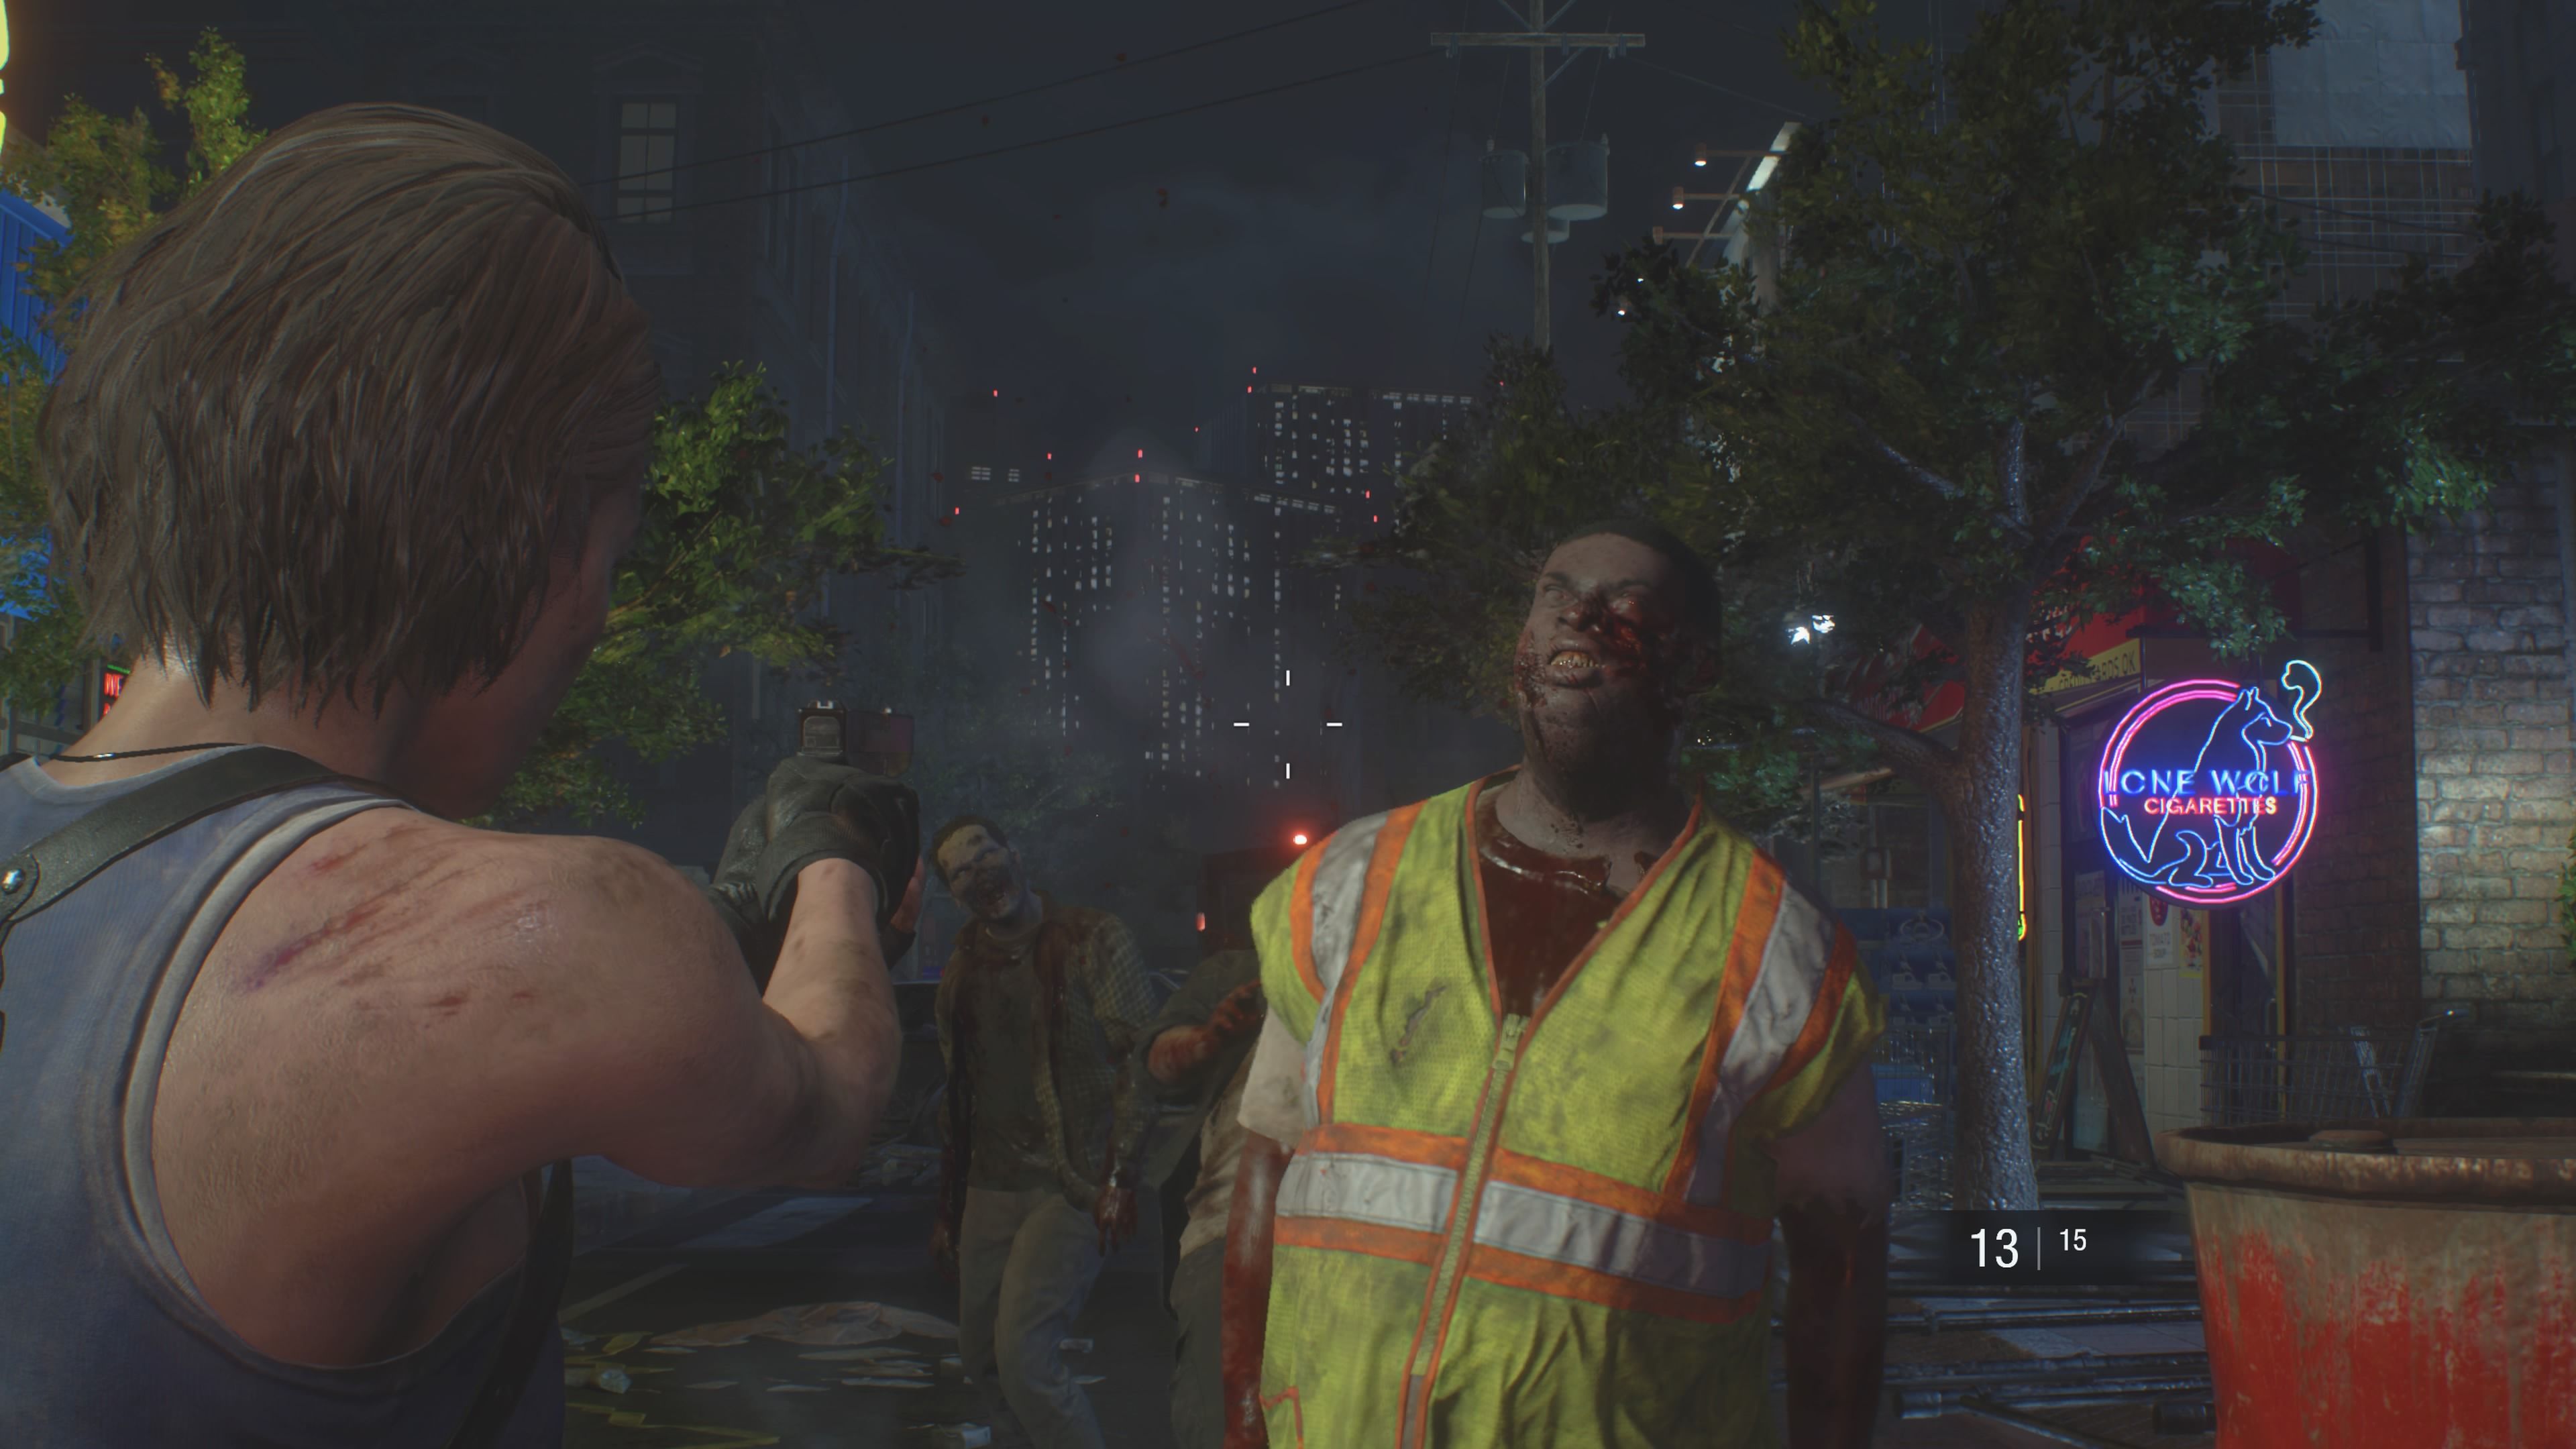 Resident Evil 3 (2020) análisis: espectacular nueva versión que